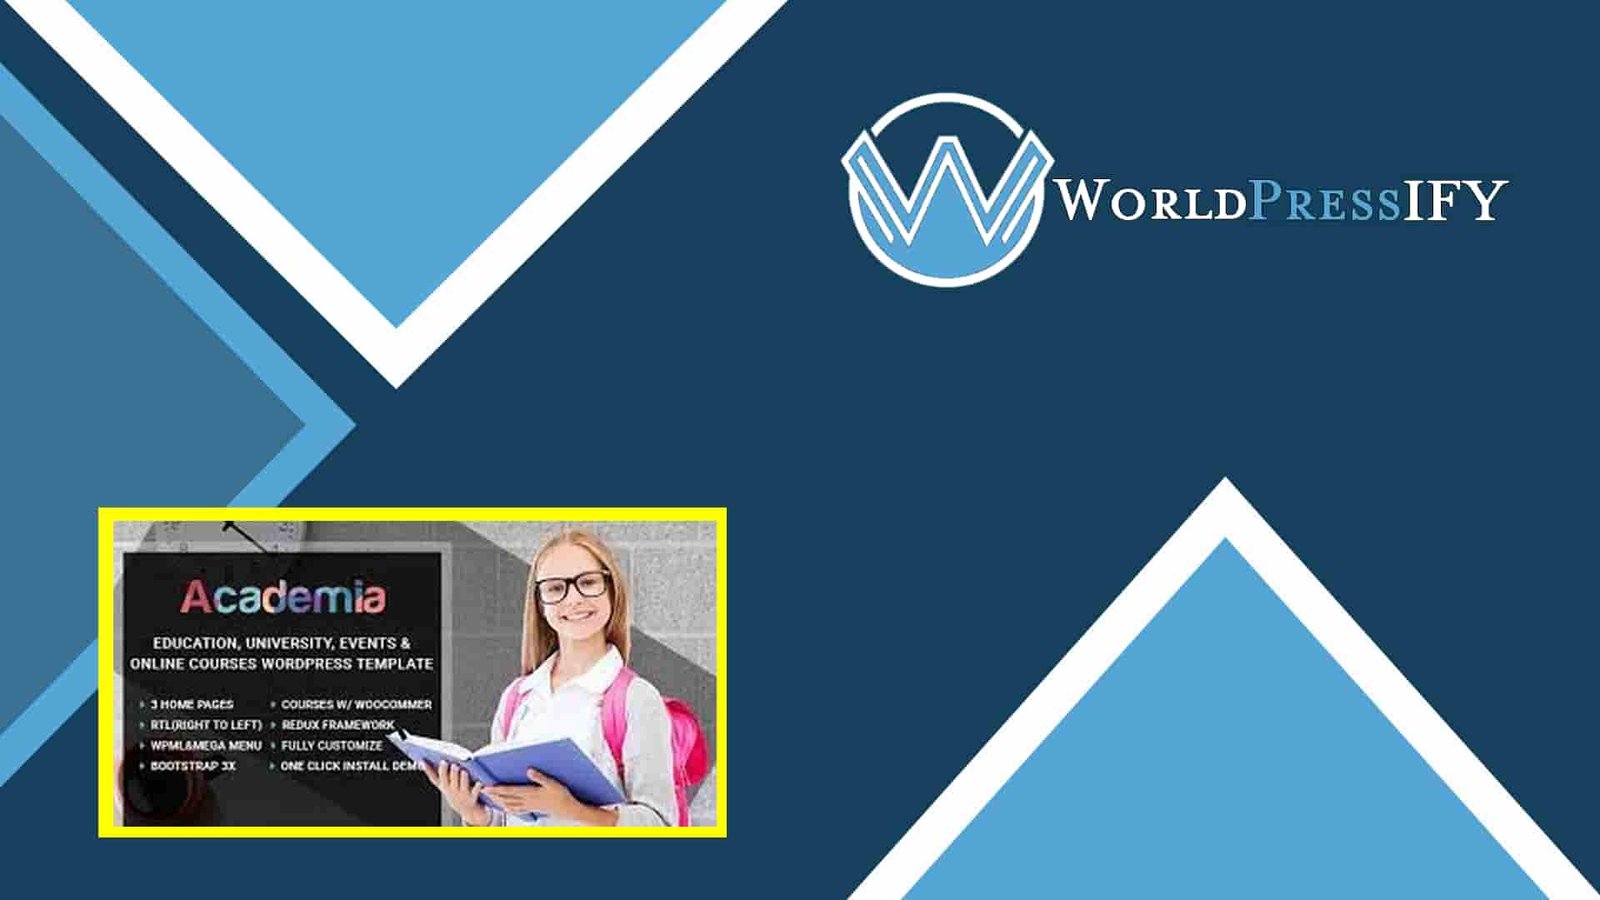 Academia – Education Center WordPress Theme - WorldPress IFY